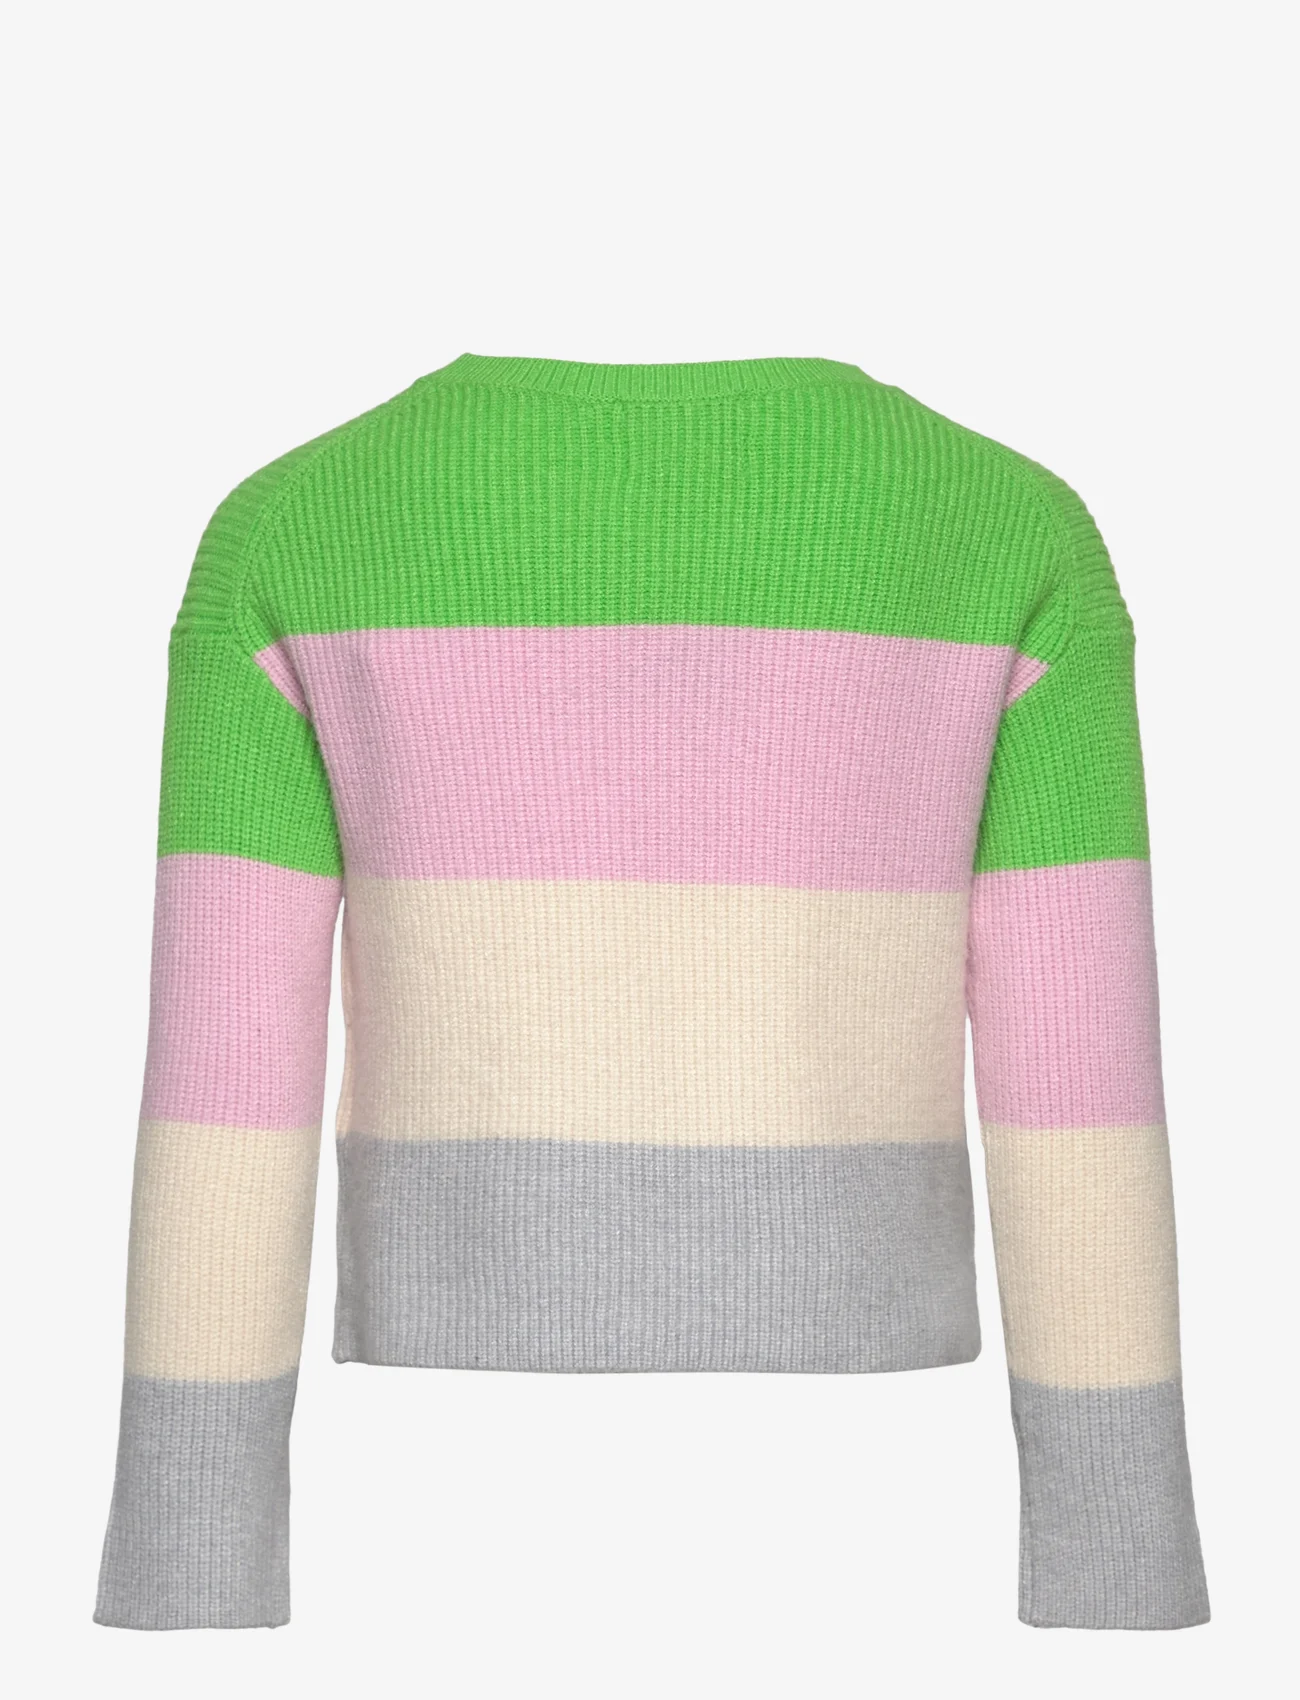 Tom Tailor - striped sweater - džemperi - green pink multicolor stripe - 1